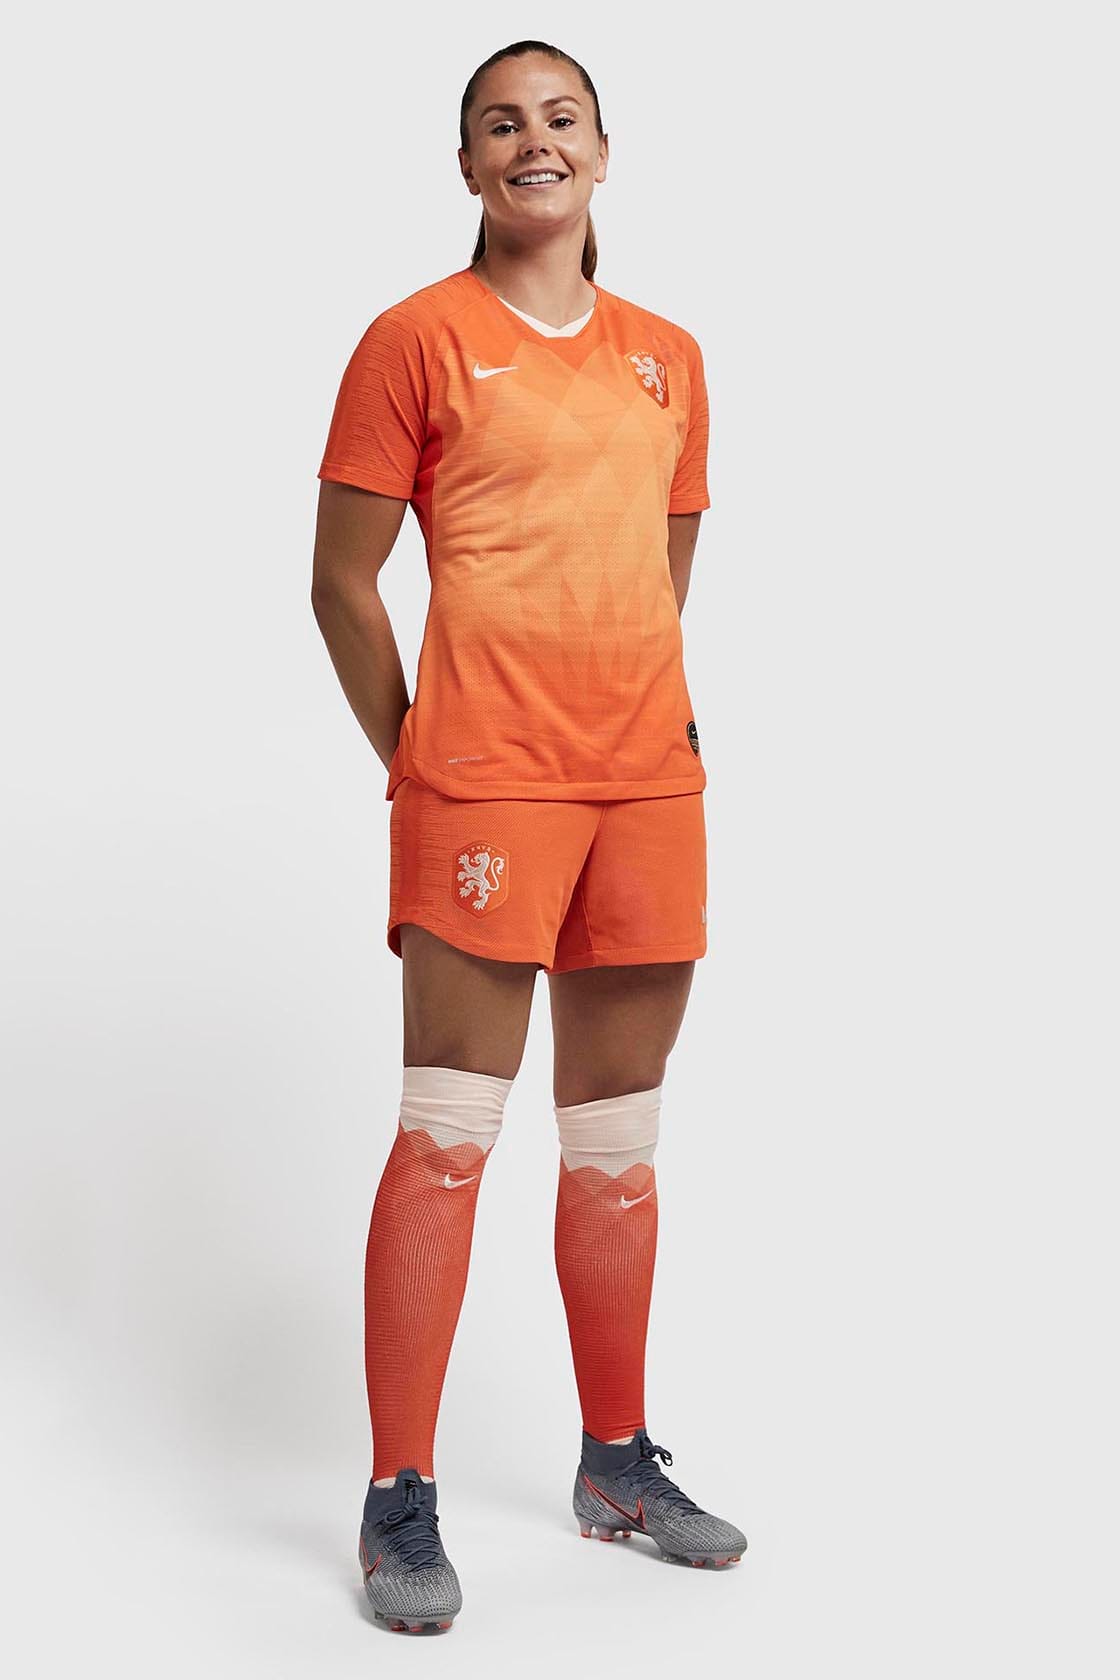 nike womens soccer uniforms